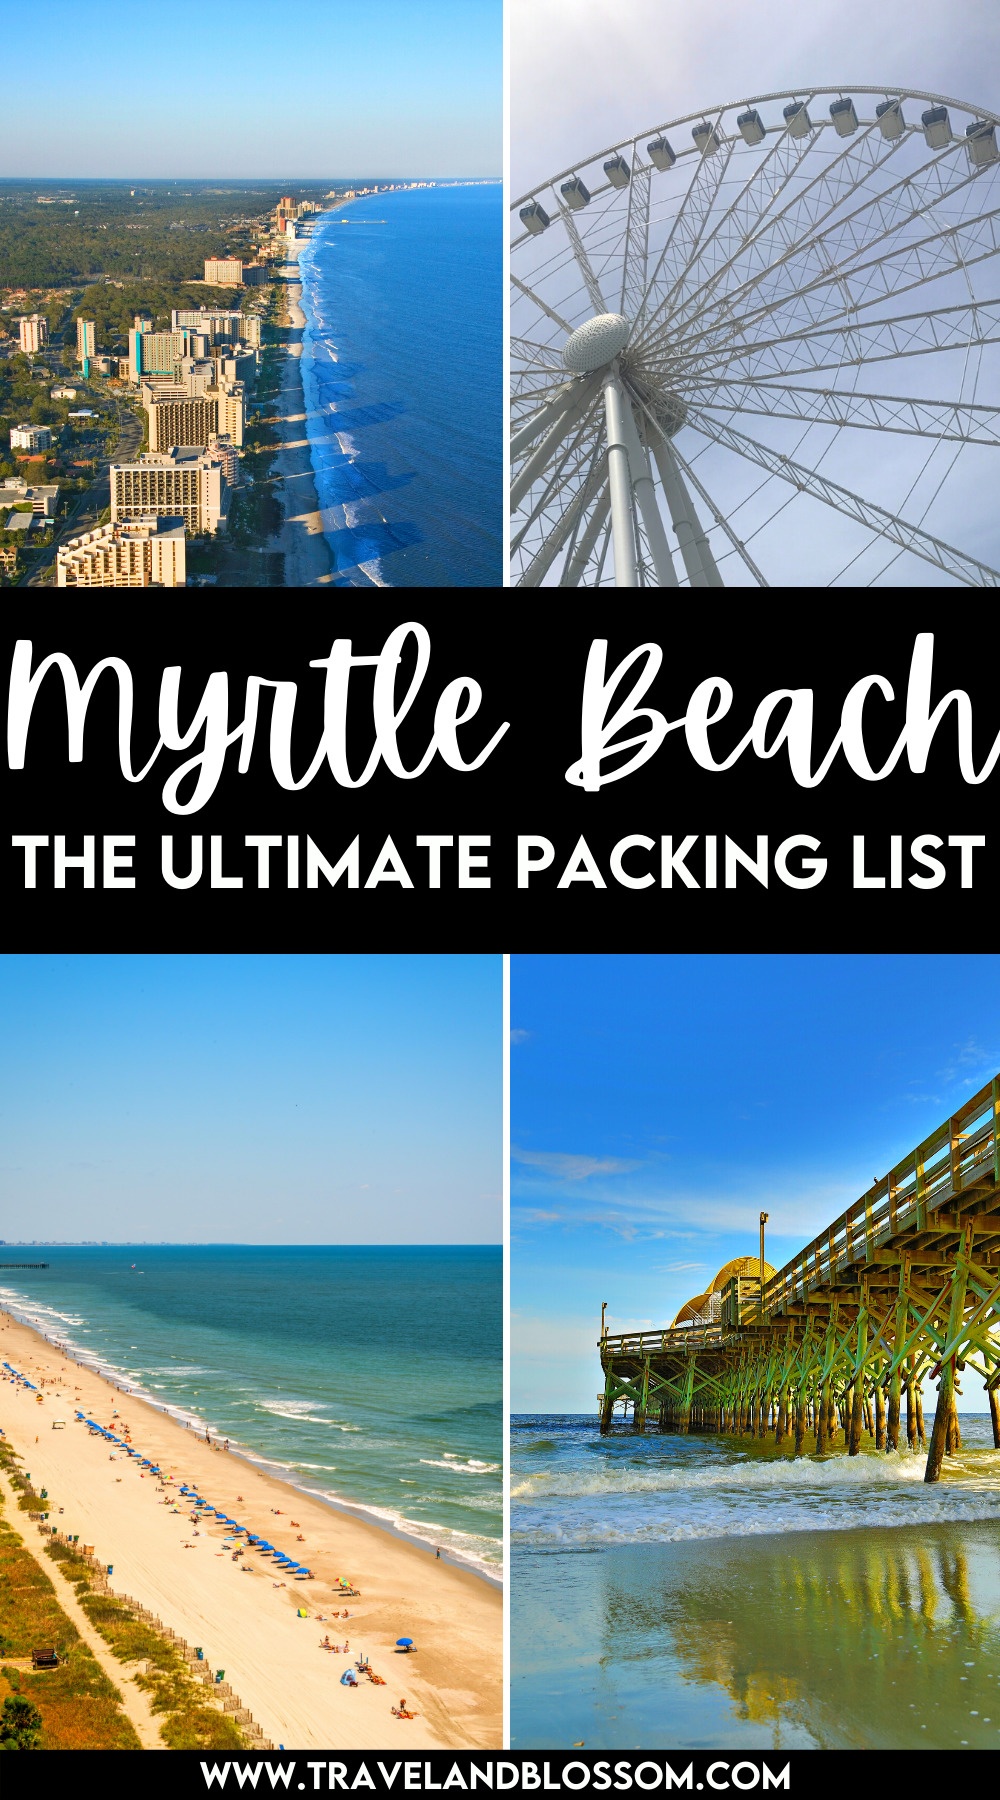 The Best Myrtle Beach Summer Packing List